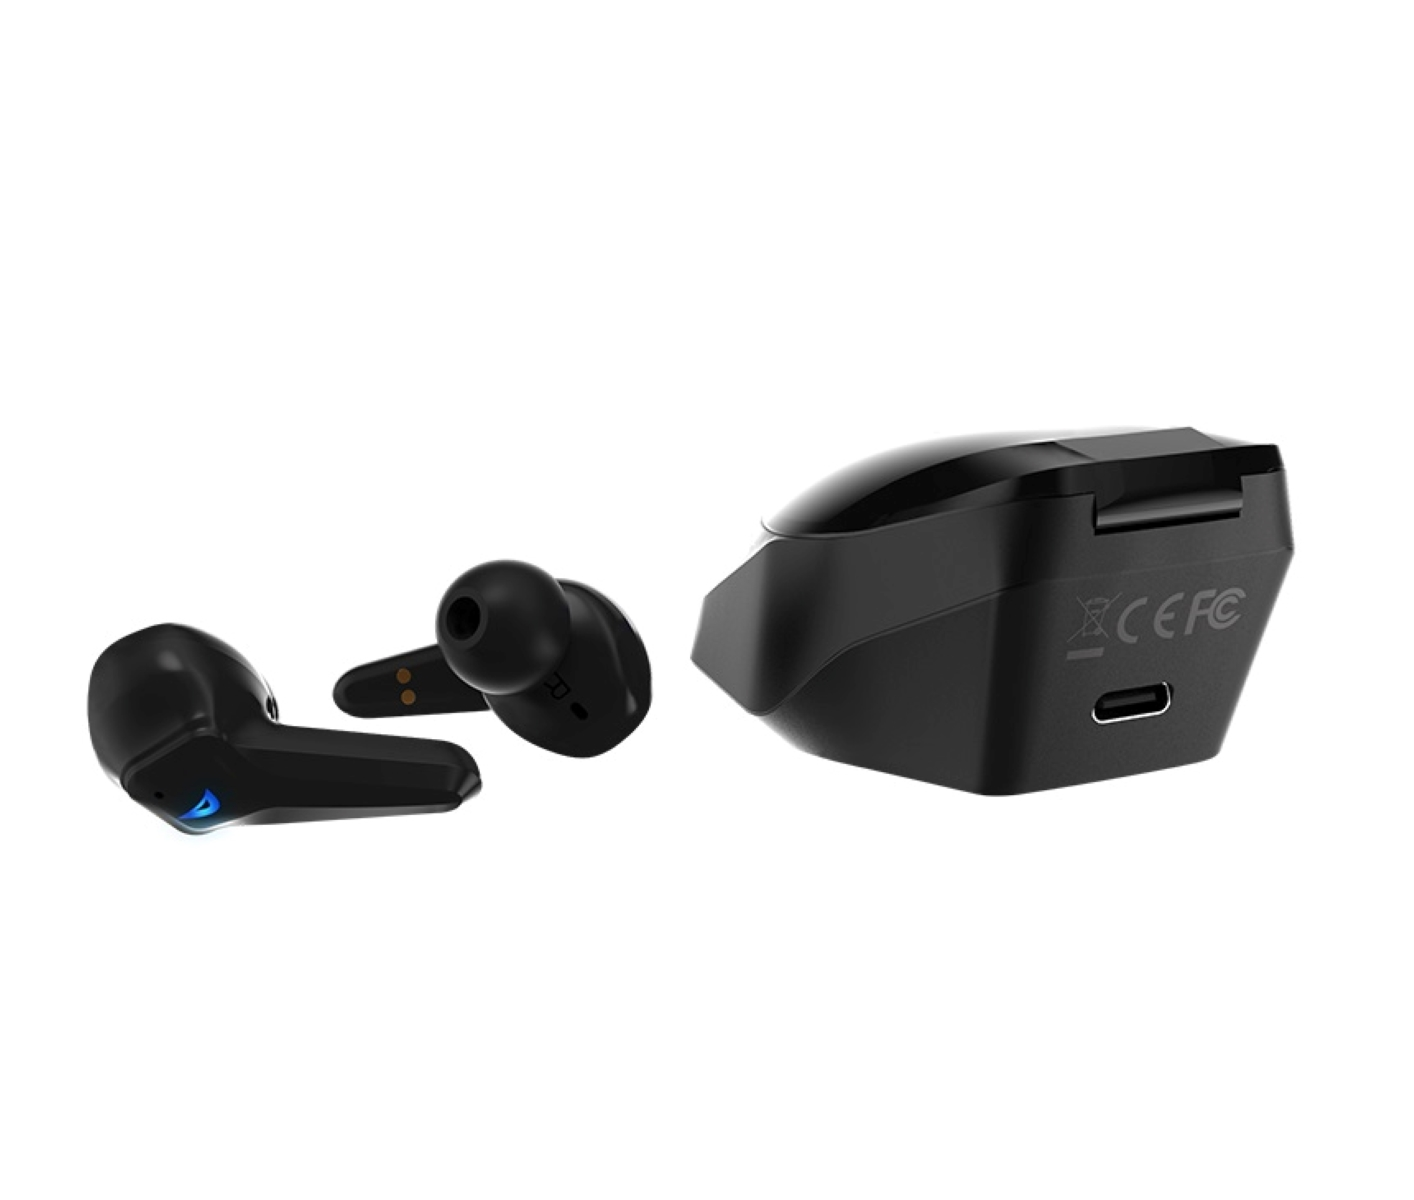 SADES Wings 200 TW-S02, In-ear schwarz/blau Gaming-Kopfhöhrer Bluetooth